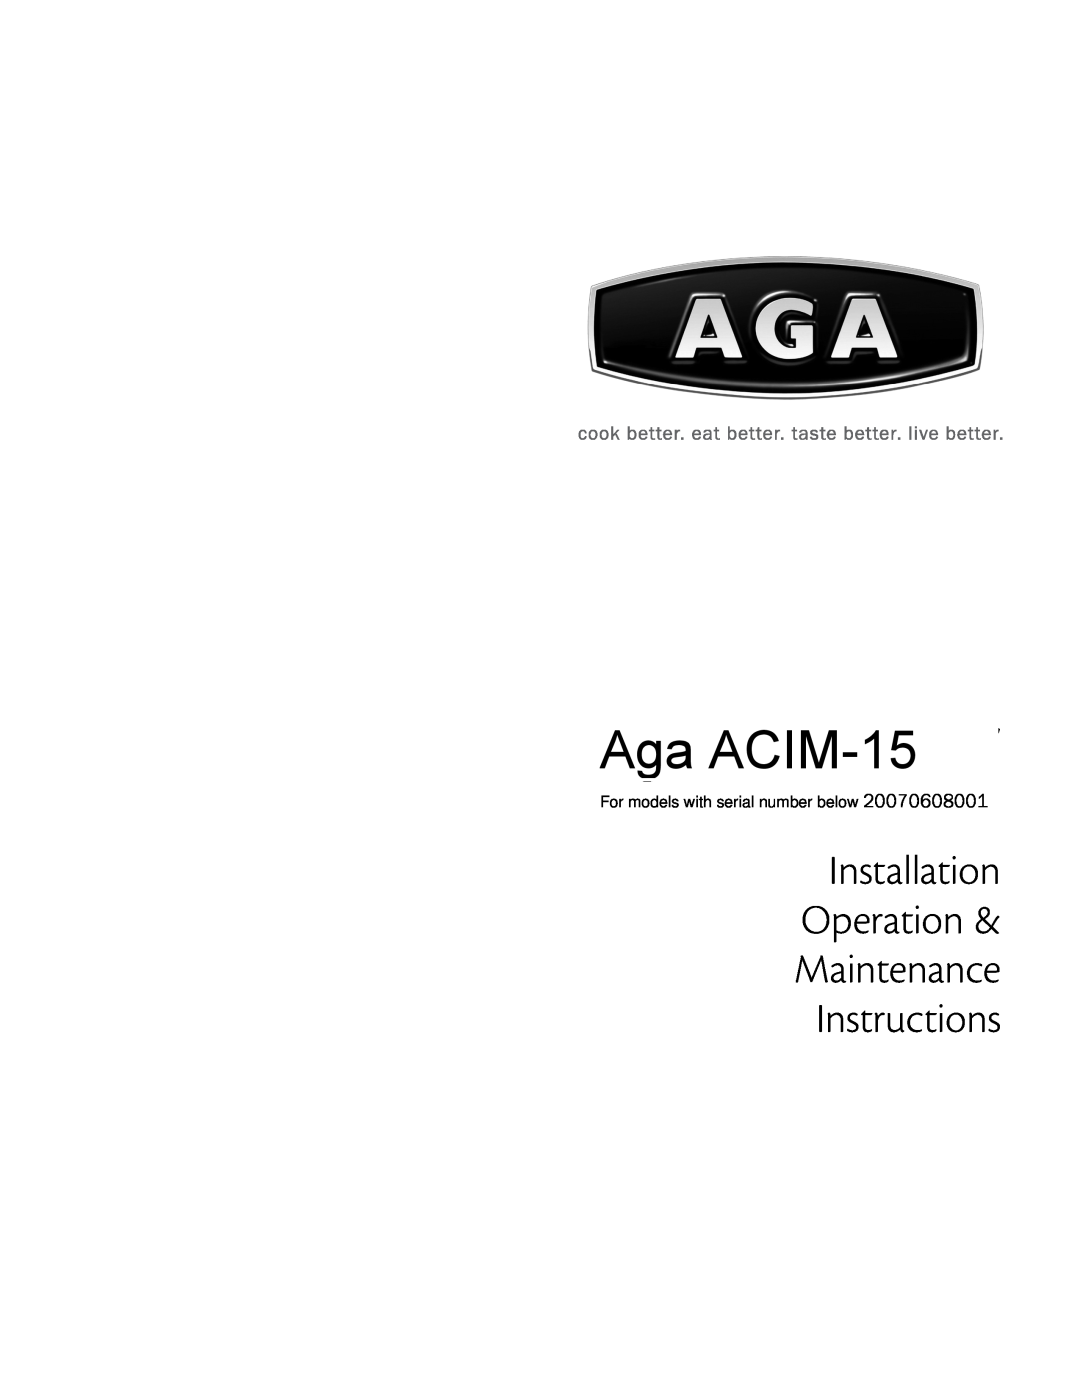 Aga Ranges manual Installation Operation & Maintenance Instructions, Aga 30AIMACIM-15115V 